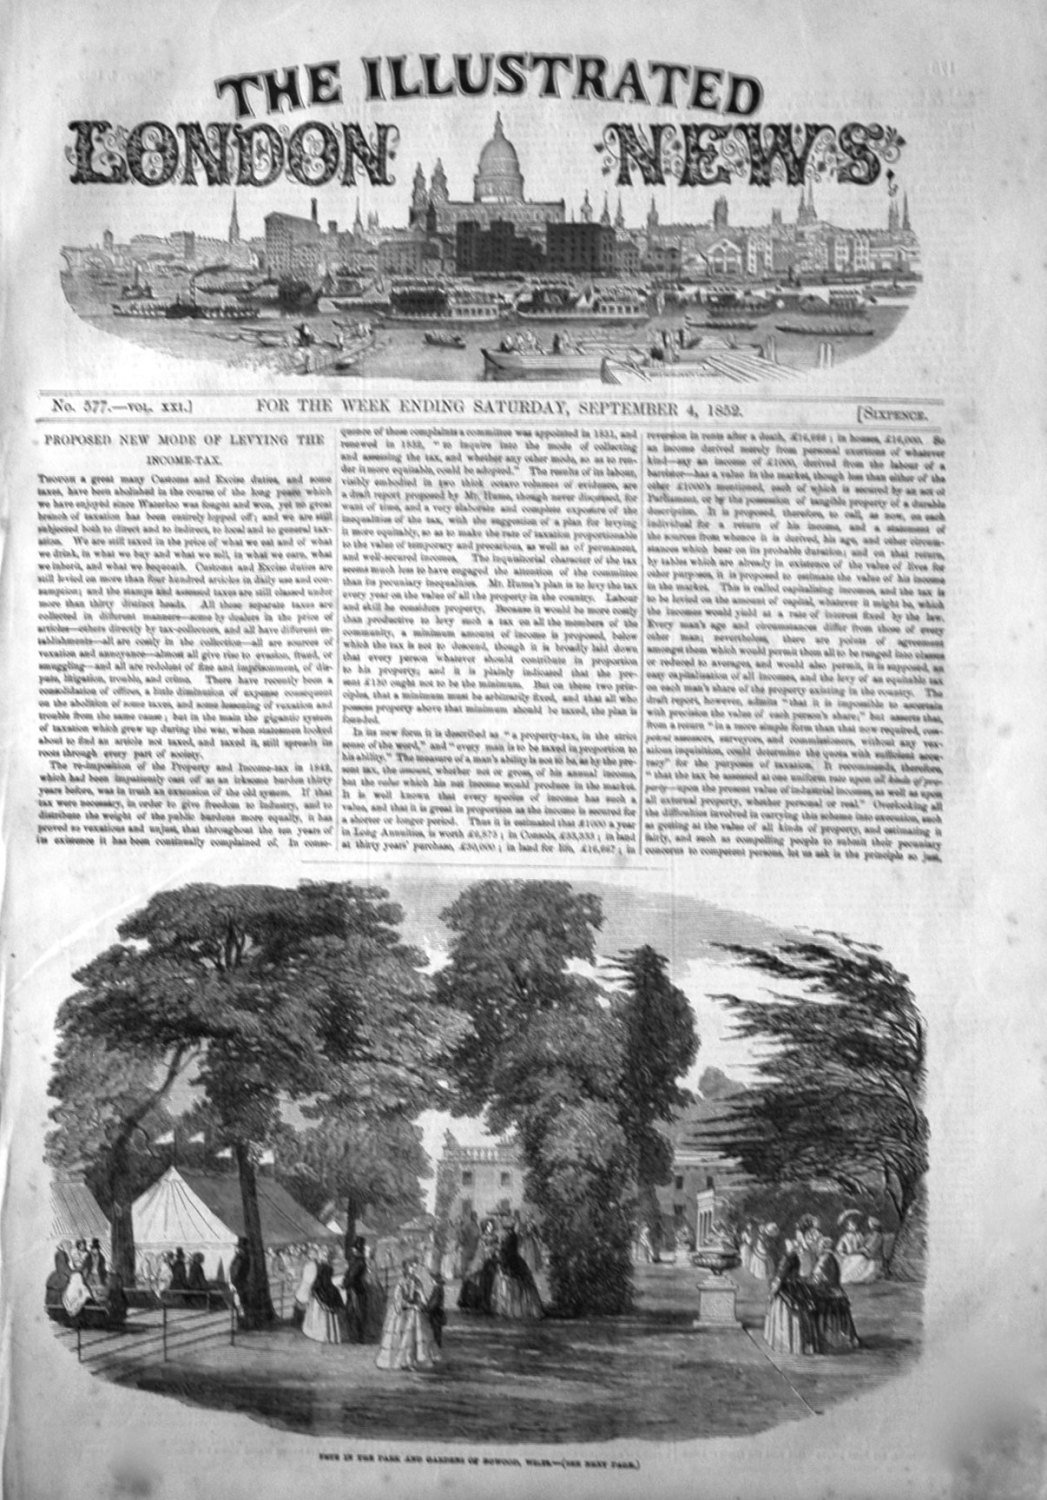 Illustrated London News Sept 4th 1852.